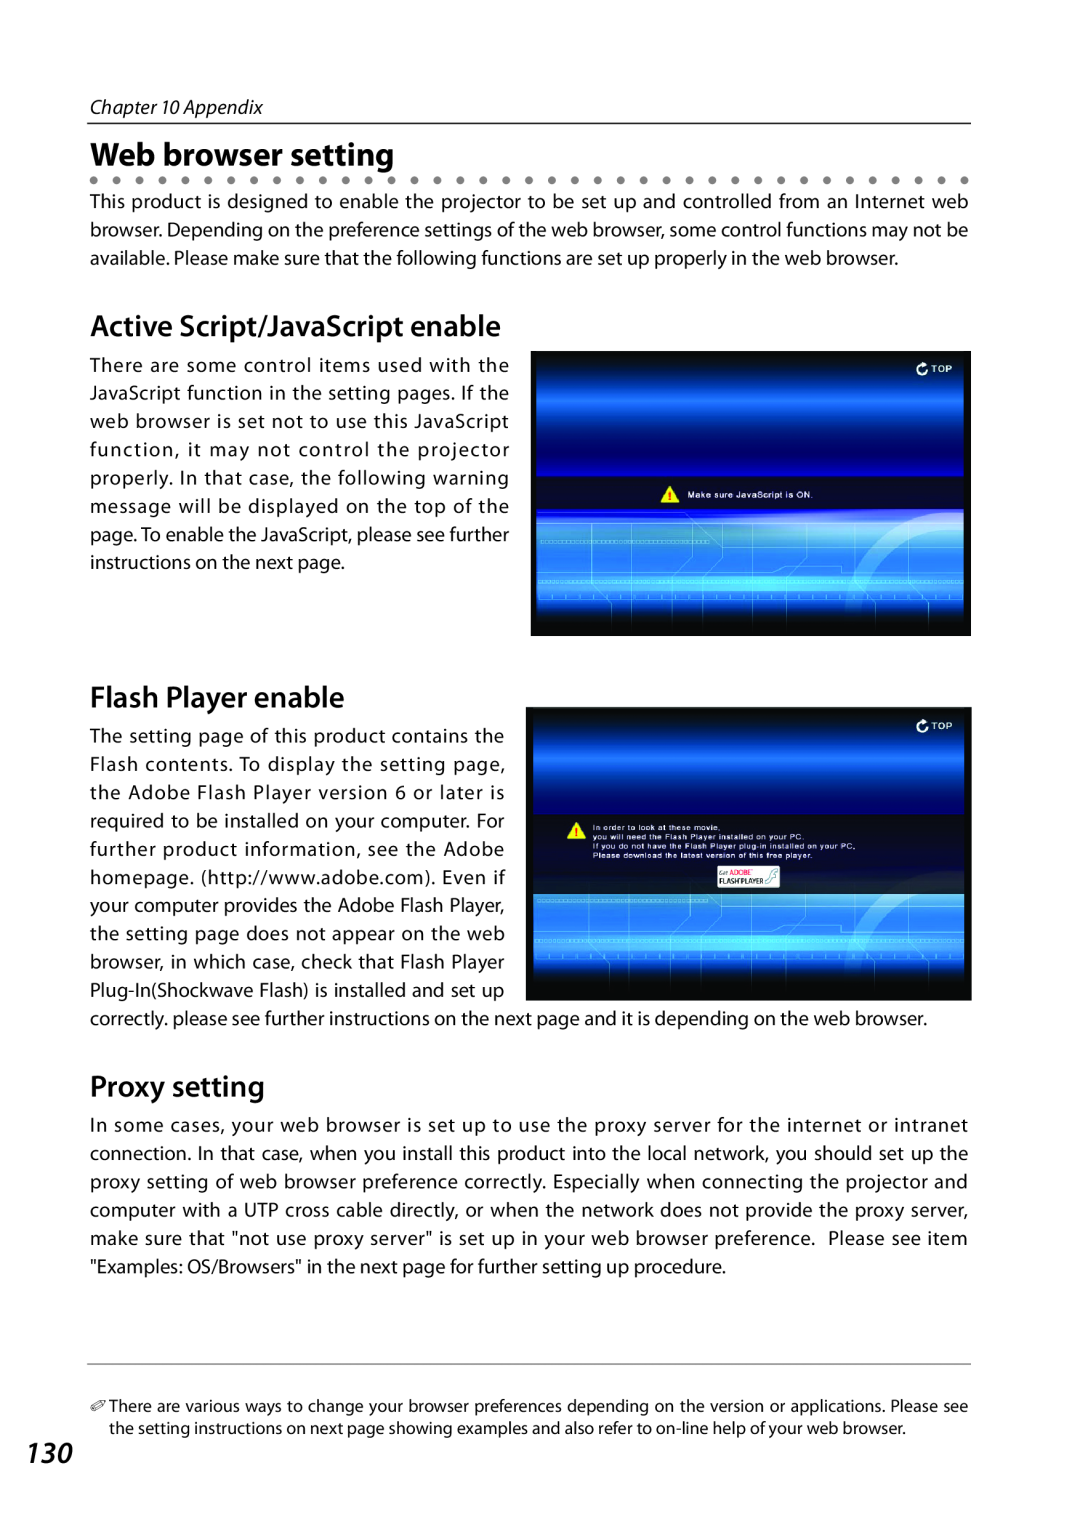 Sanyo PLCXL51 Web browser setting, Active Script/JavaScript enable, Flash Player enable, Proxy setting, Appendix 